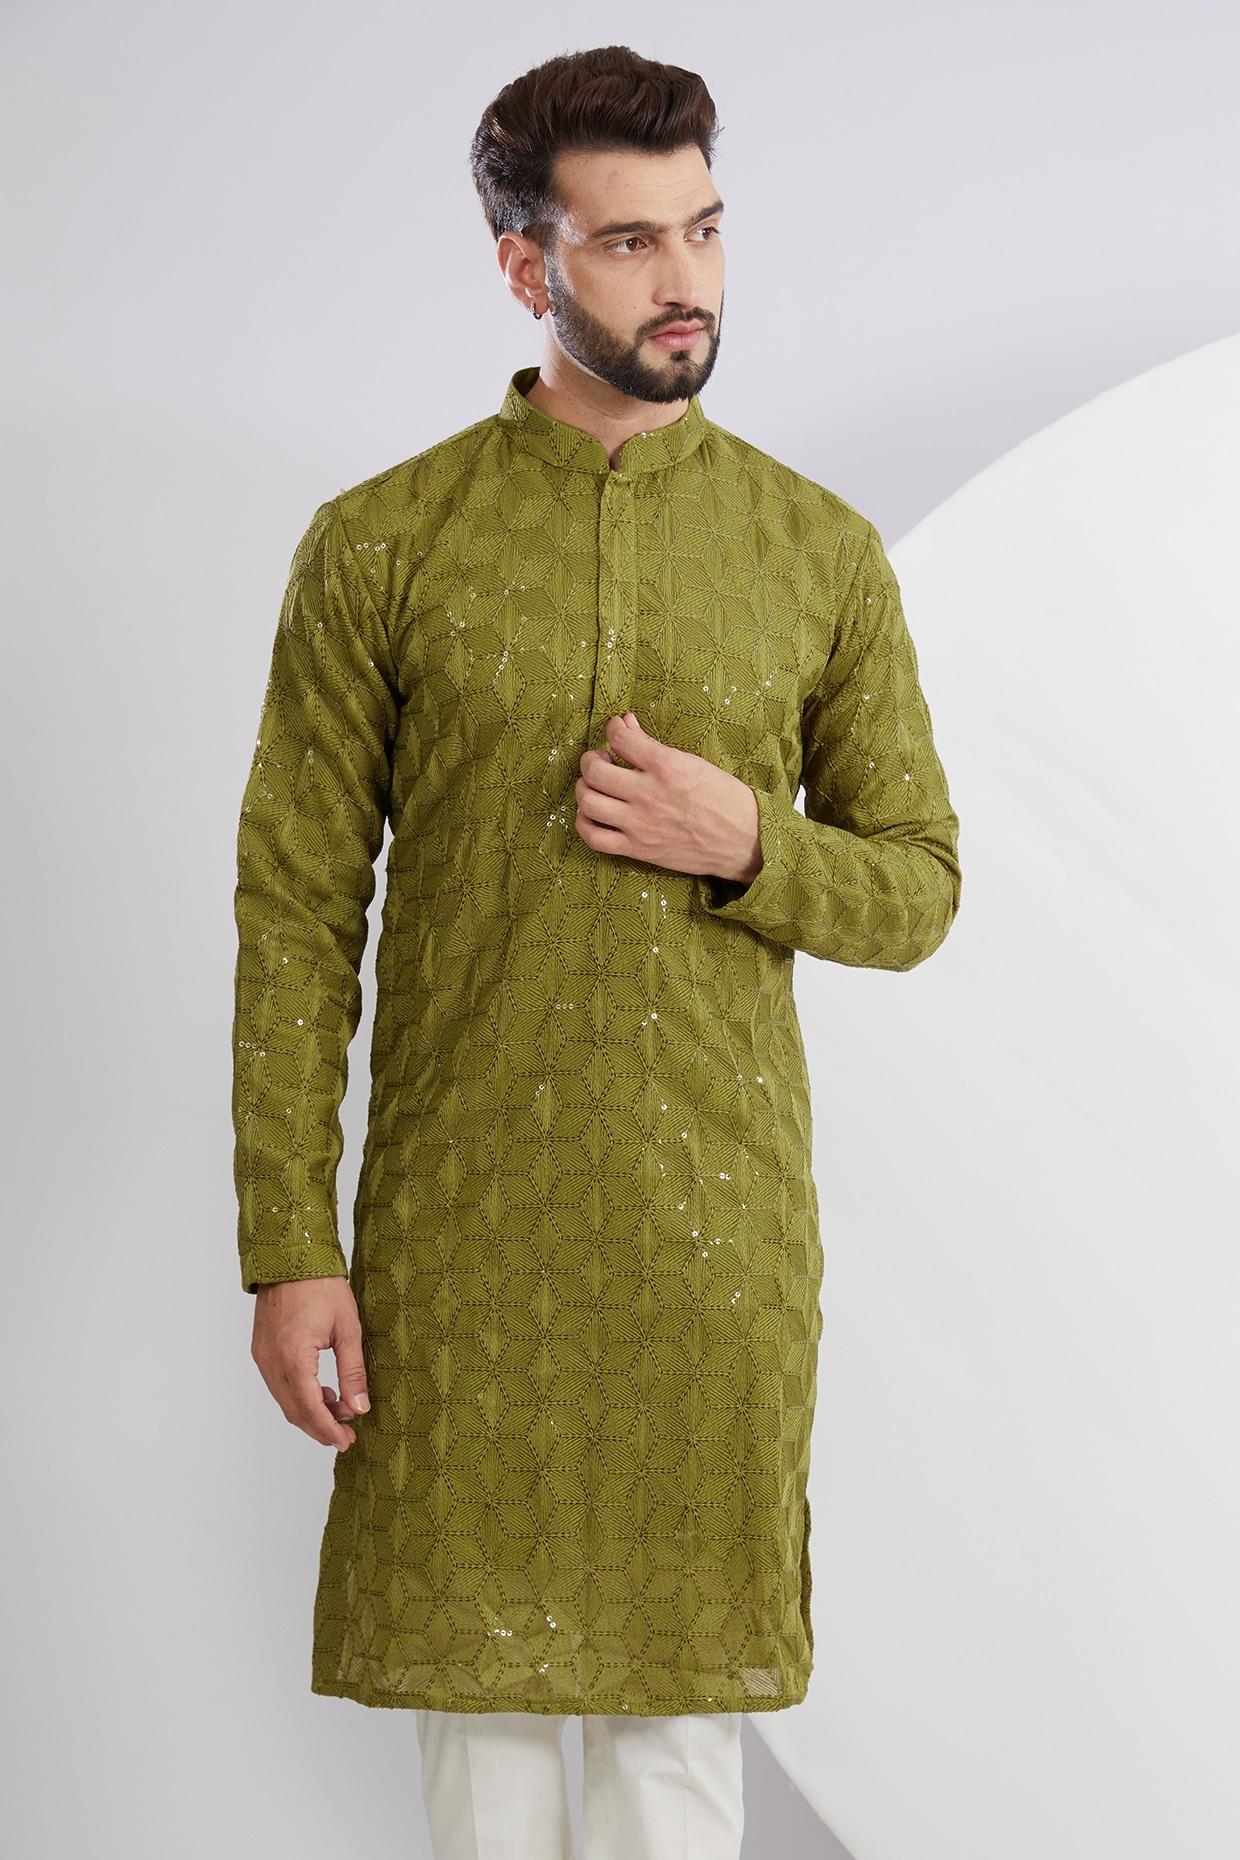 Latest Designer Nehru Jacket Designs & Styles for Grooms & Groomsmen |  Wedding kurta for men, Wedding outfit men, Menswear inspired